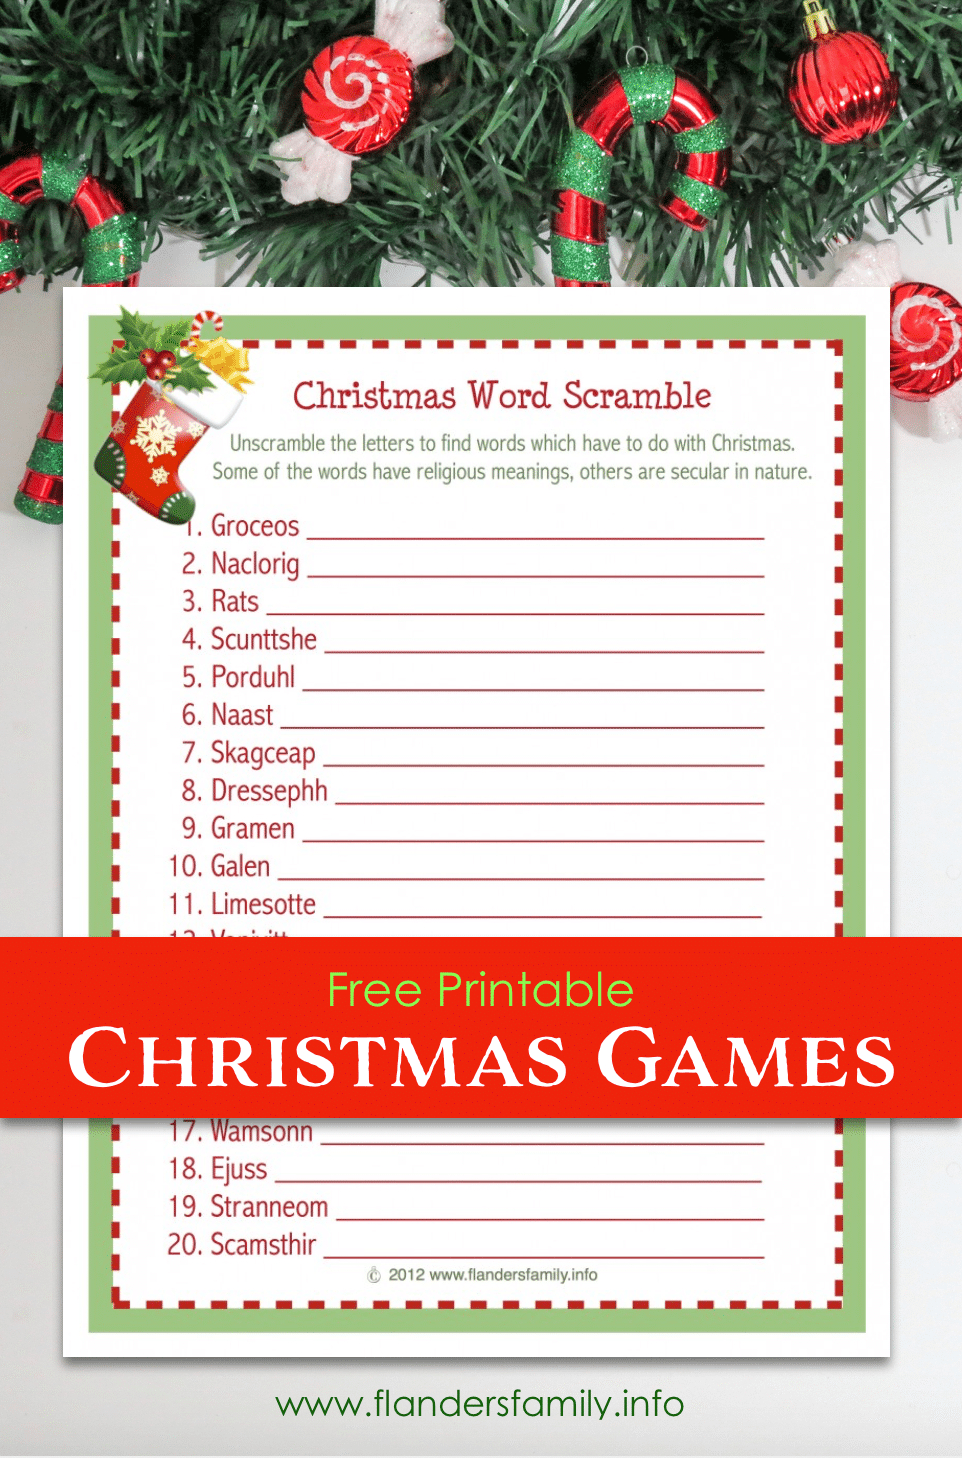 Christmas Word Scramble (Free Printable) - Flanders Family Homelife - Free Printable Religious Christmas Games